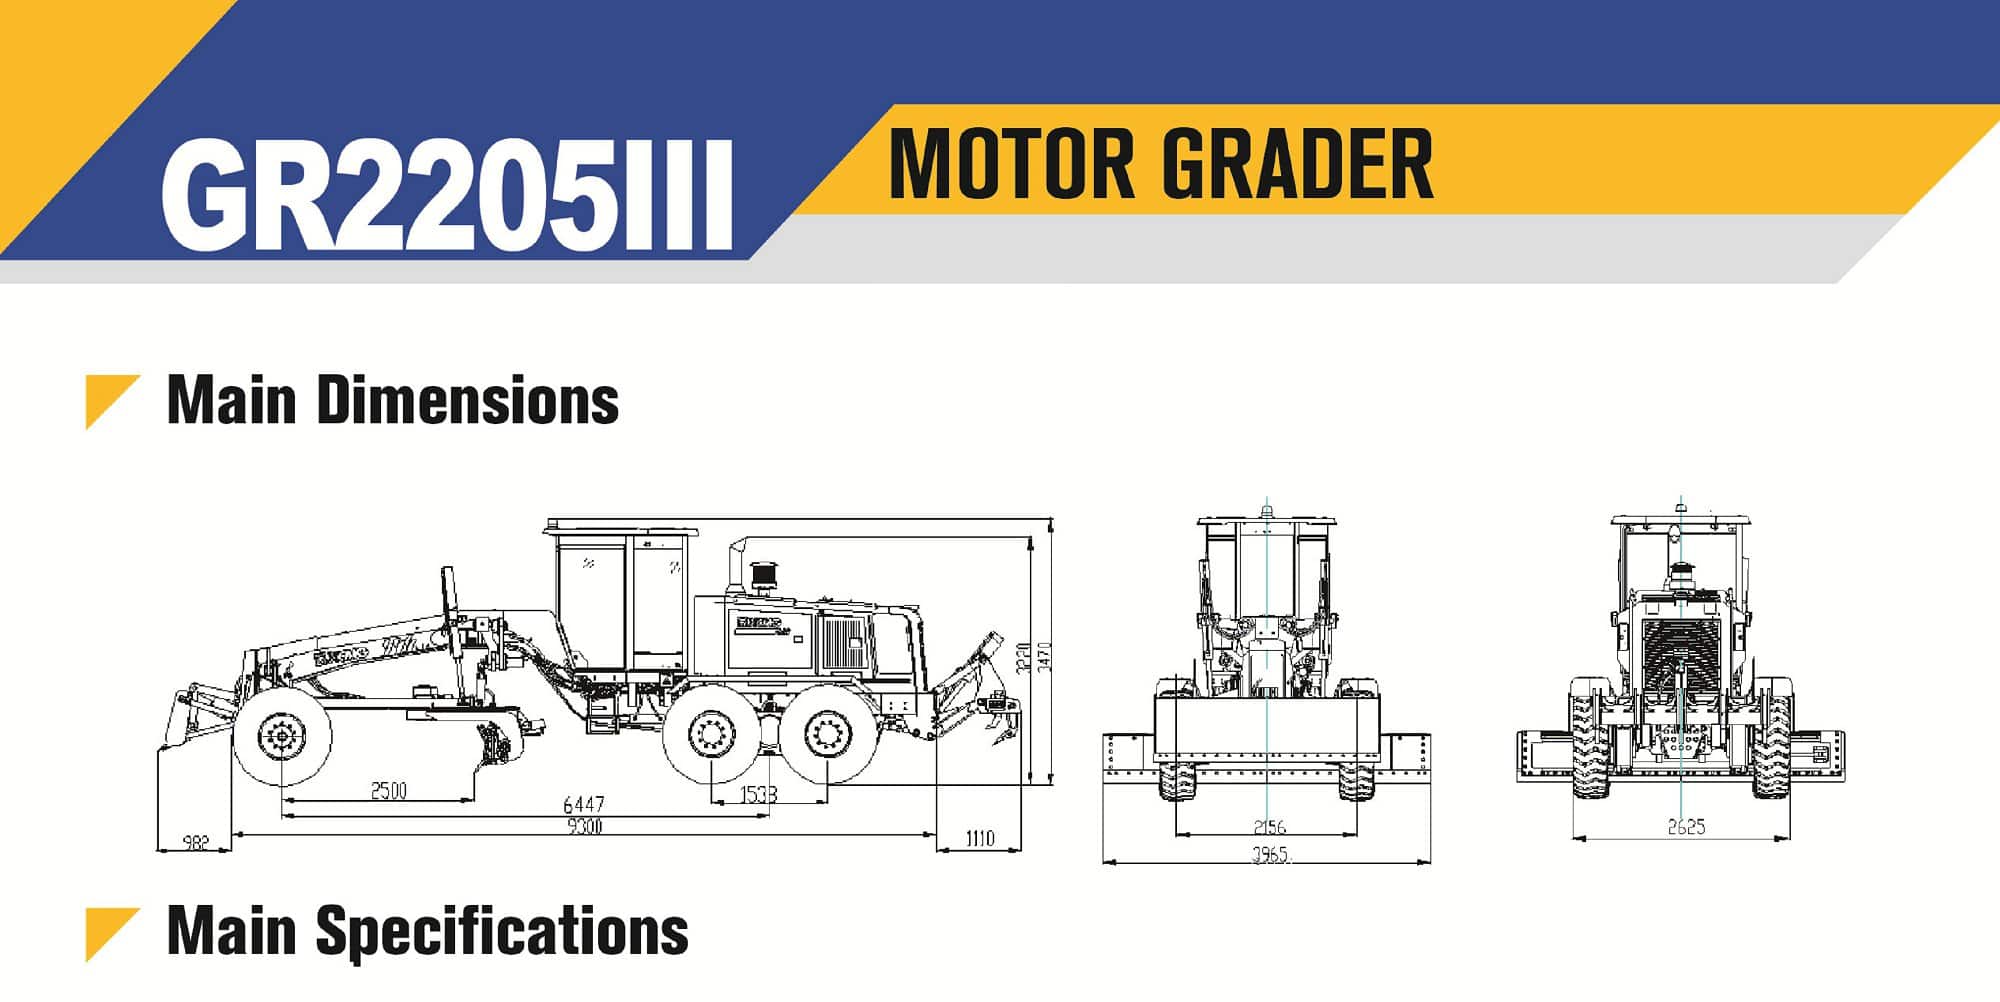 XCMG Official GR2205III Motor Grader for sale